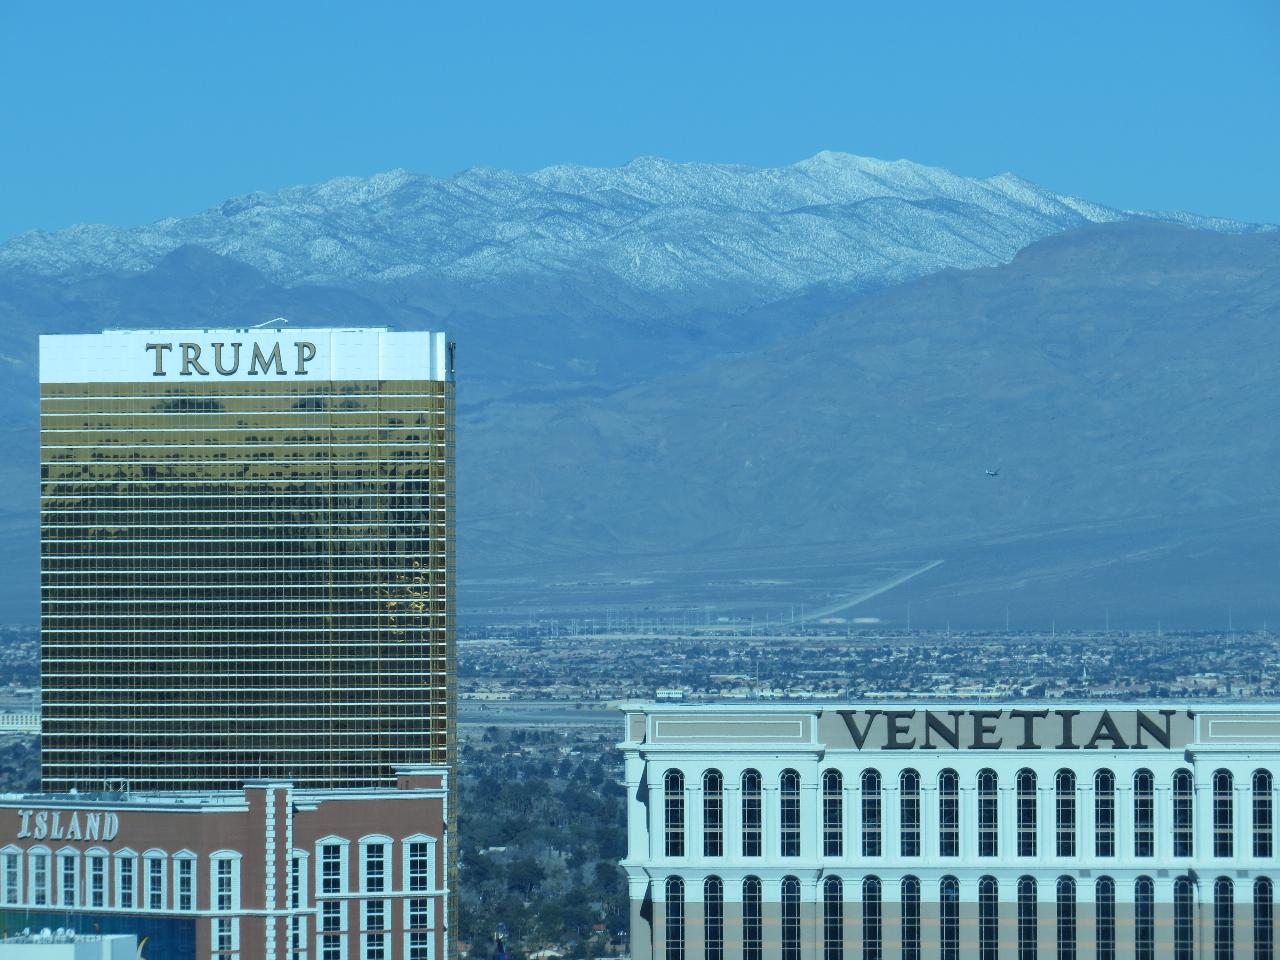 Trump, Venetian, Snowy Mountain - Las Vegas Strip - Las Vegas, NV